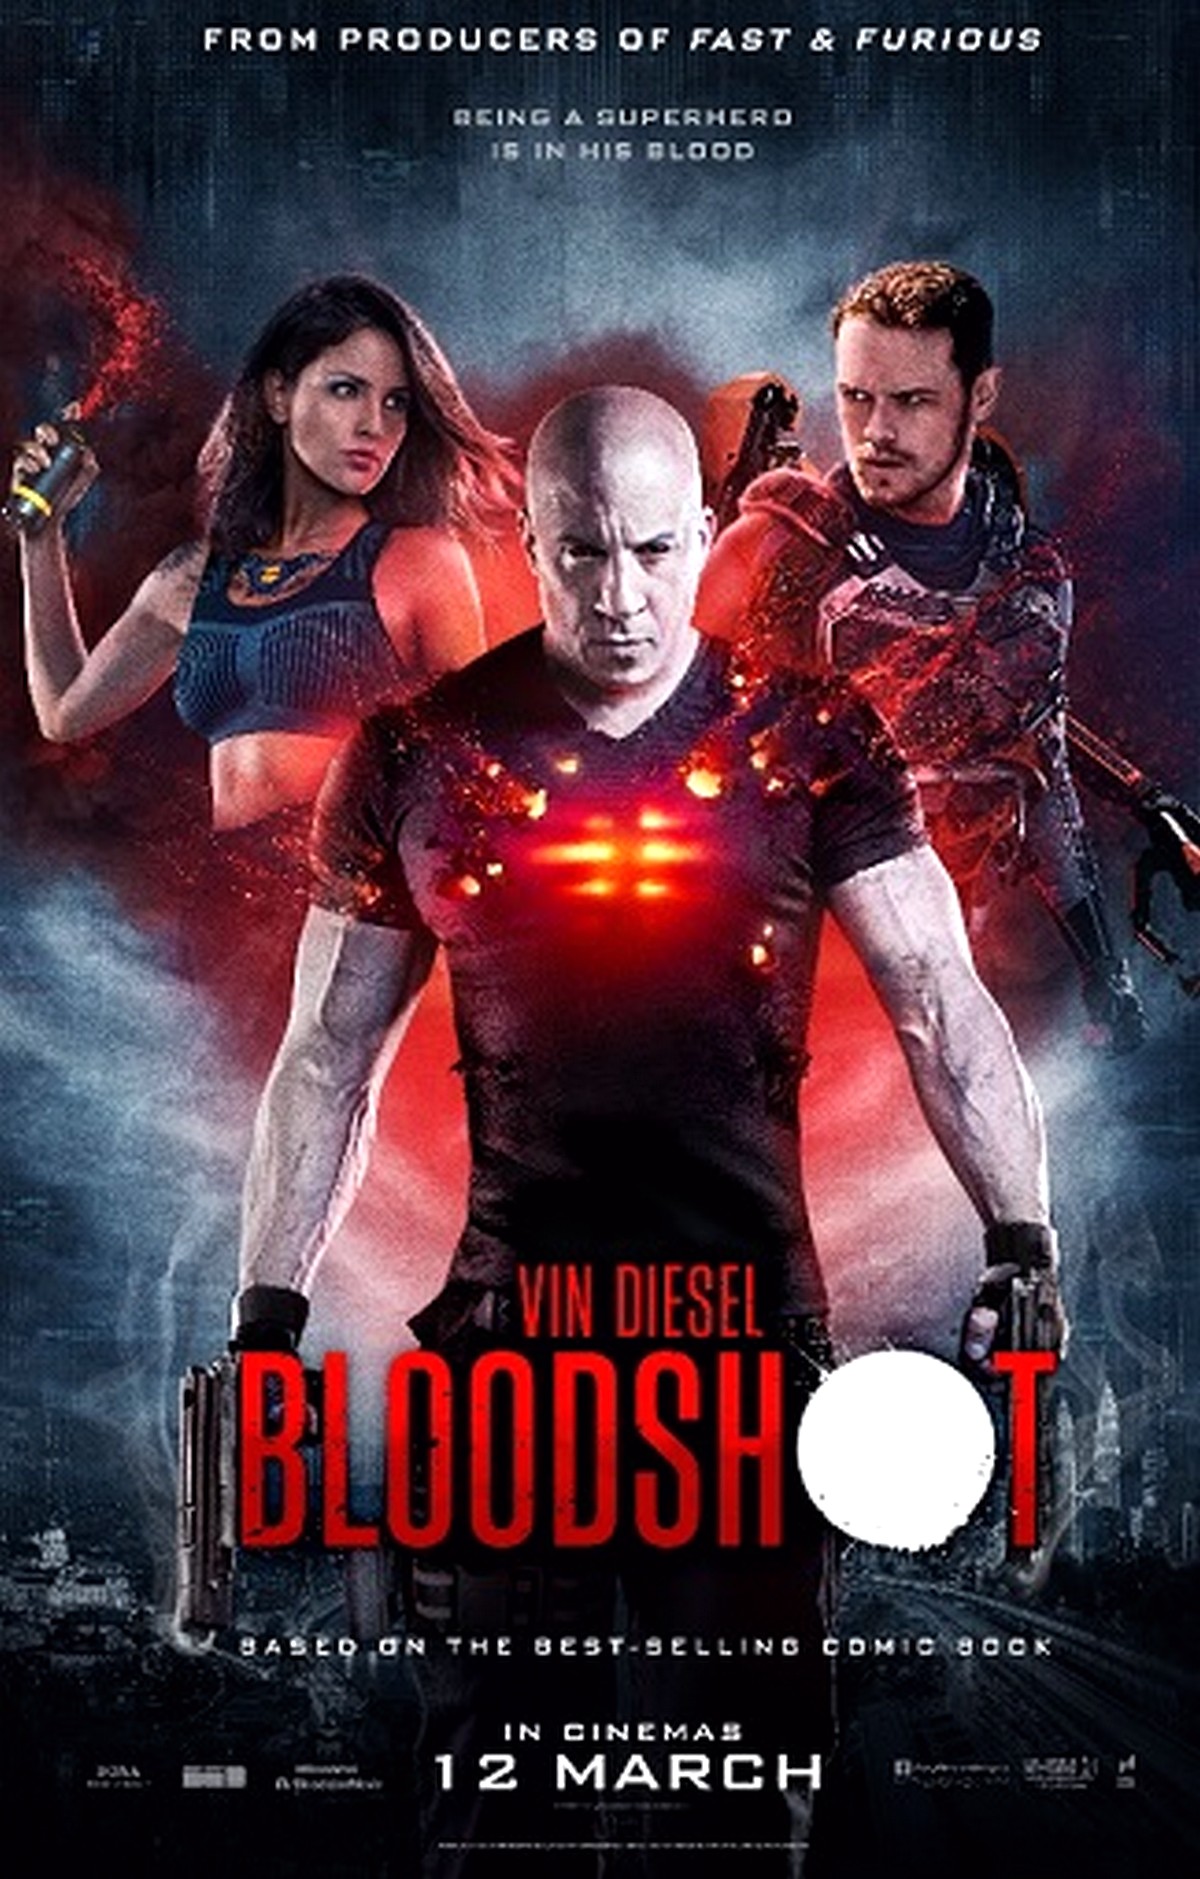 005-March-2020-Malaysia-Movie-Promotion-Bloodshot - Entertainment 